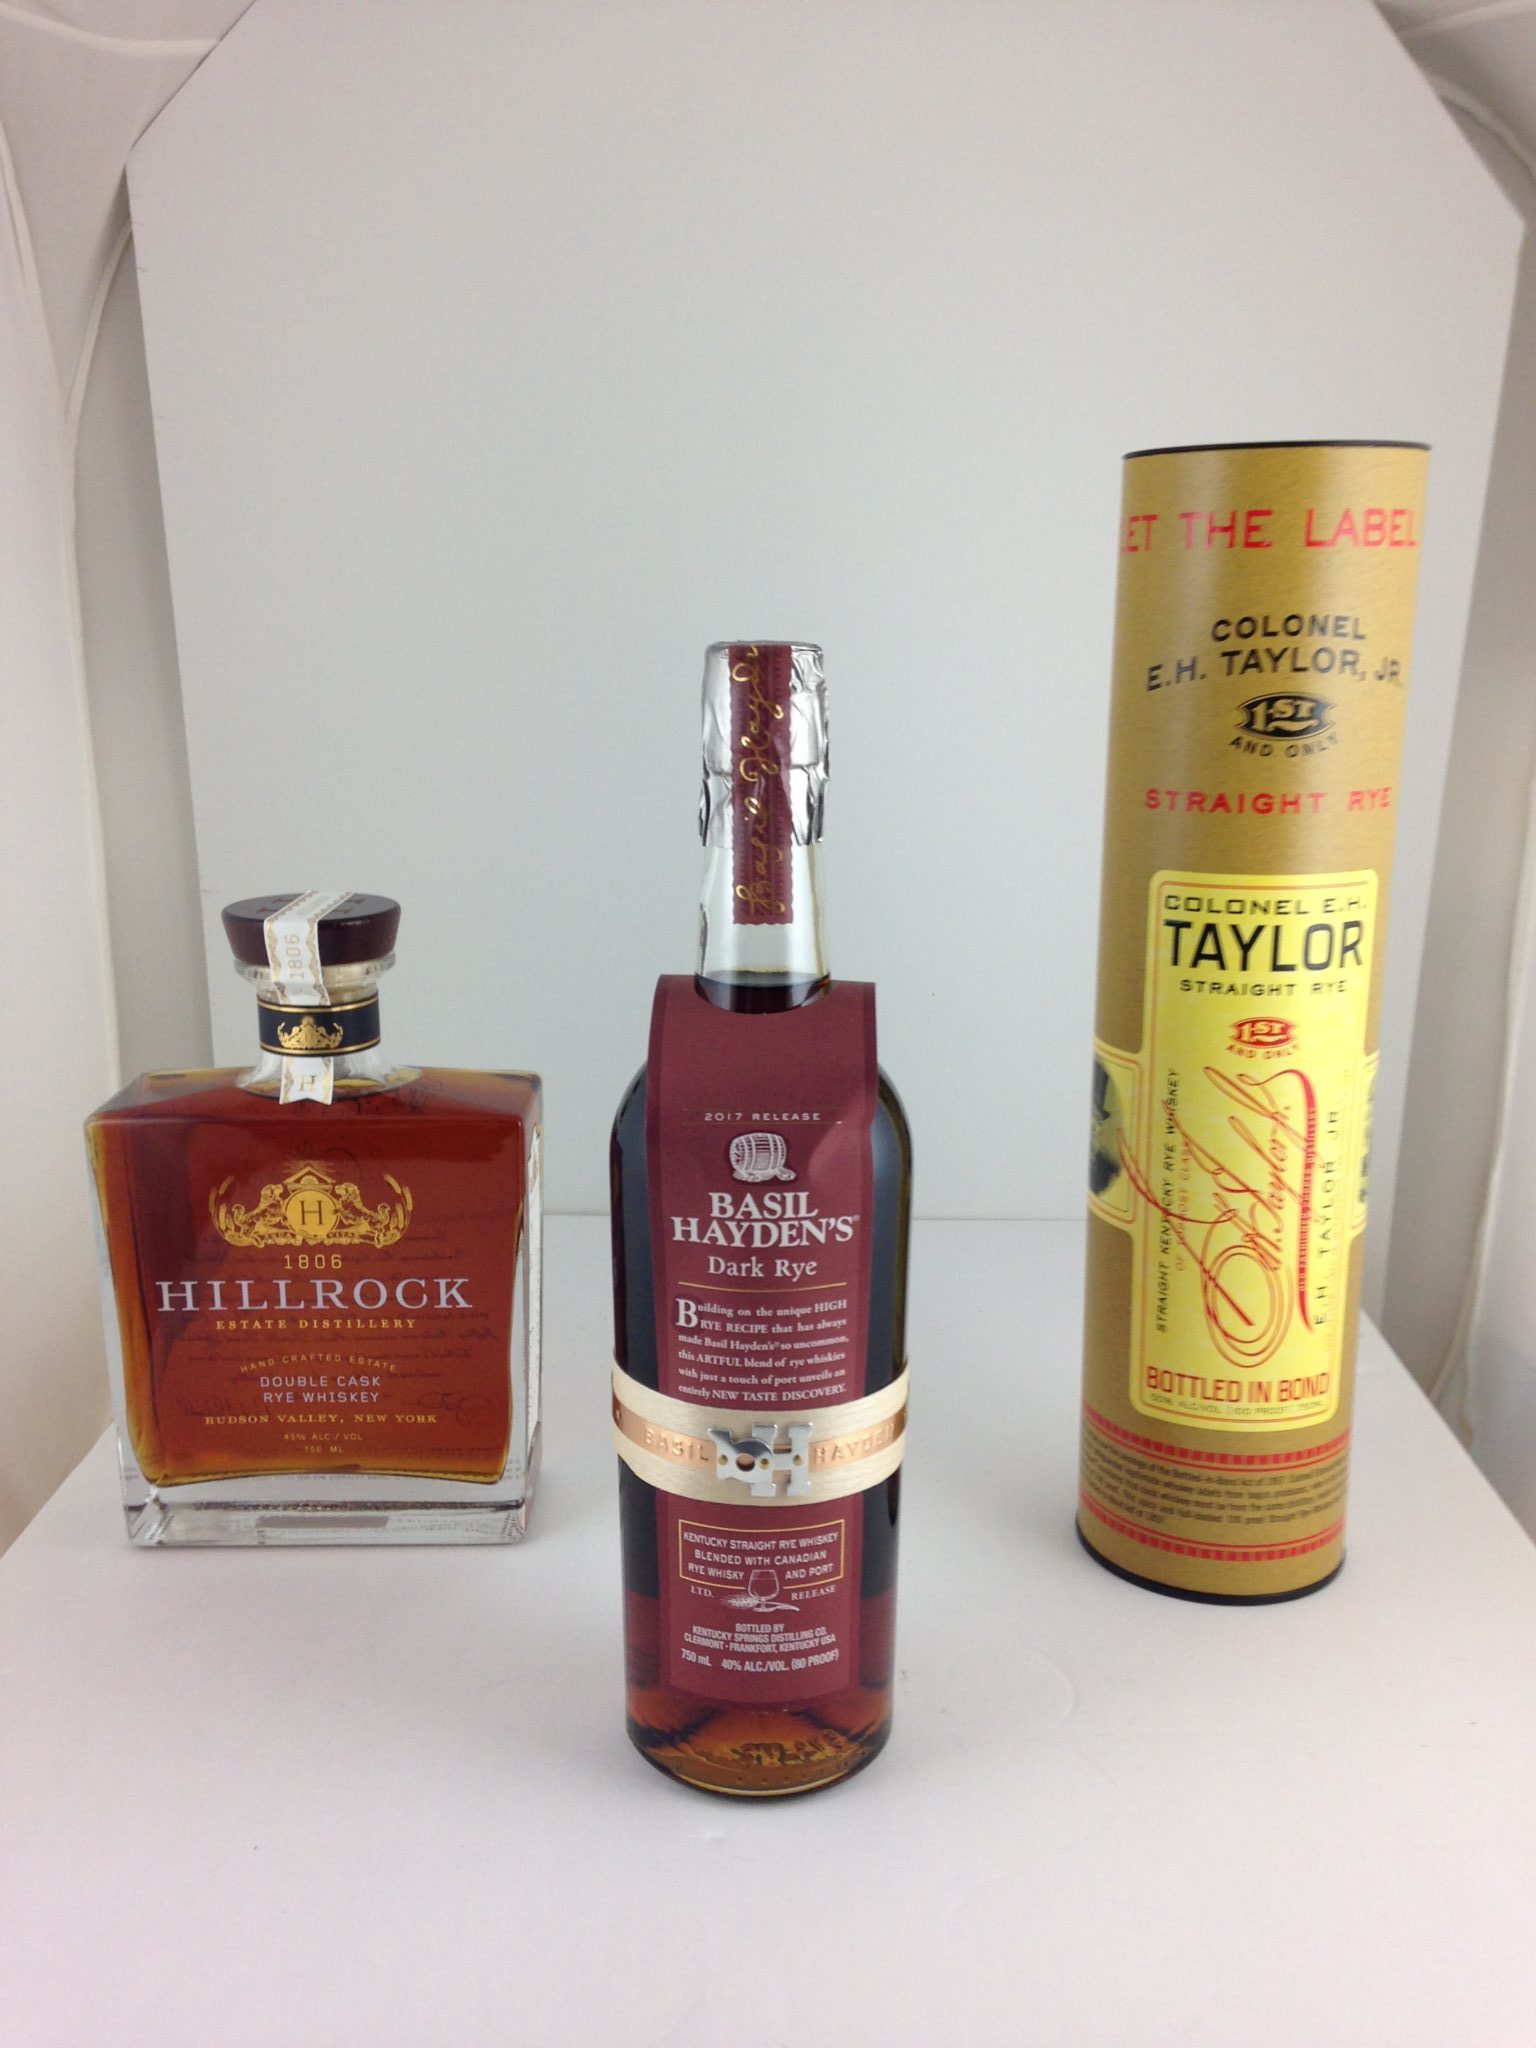 Hillrock Estate Distillery Double Cask Rye, Basil Hayden's Dark Rye, Colonel E.H. Taylor Bottled in Bond Rye Whiskey